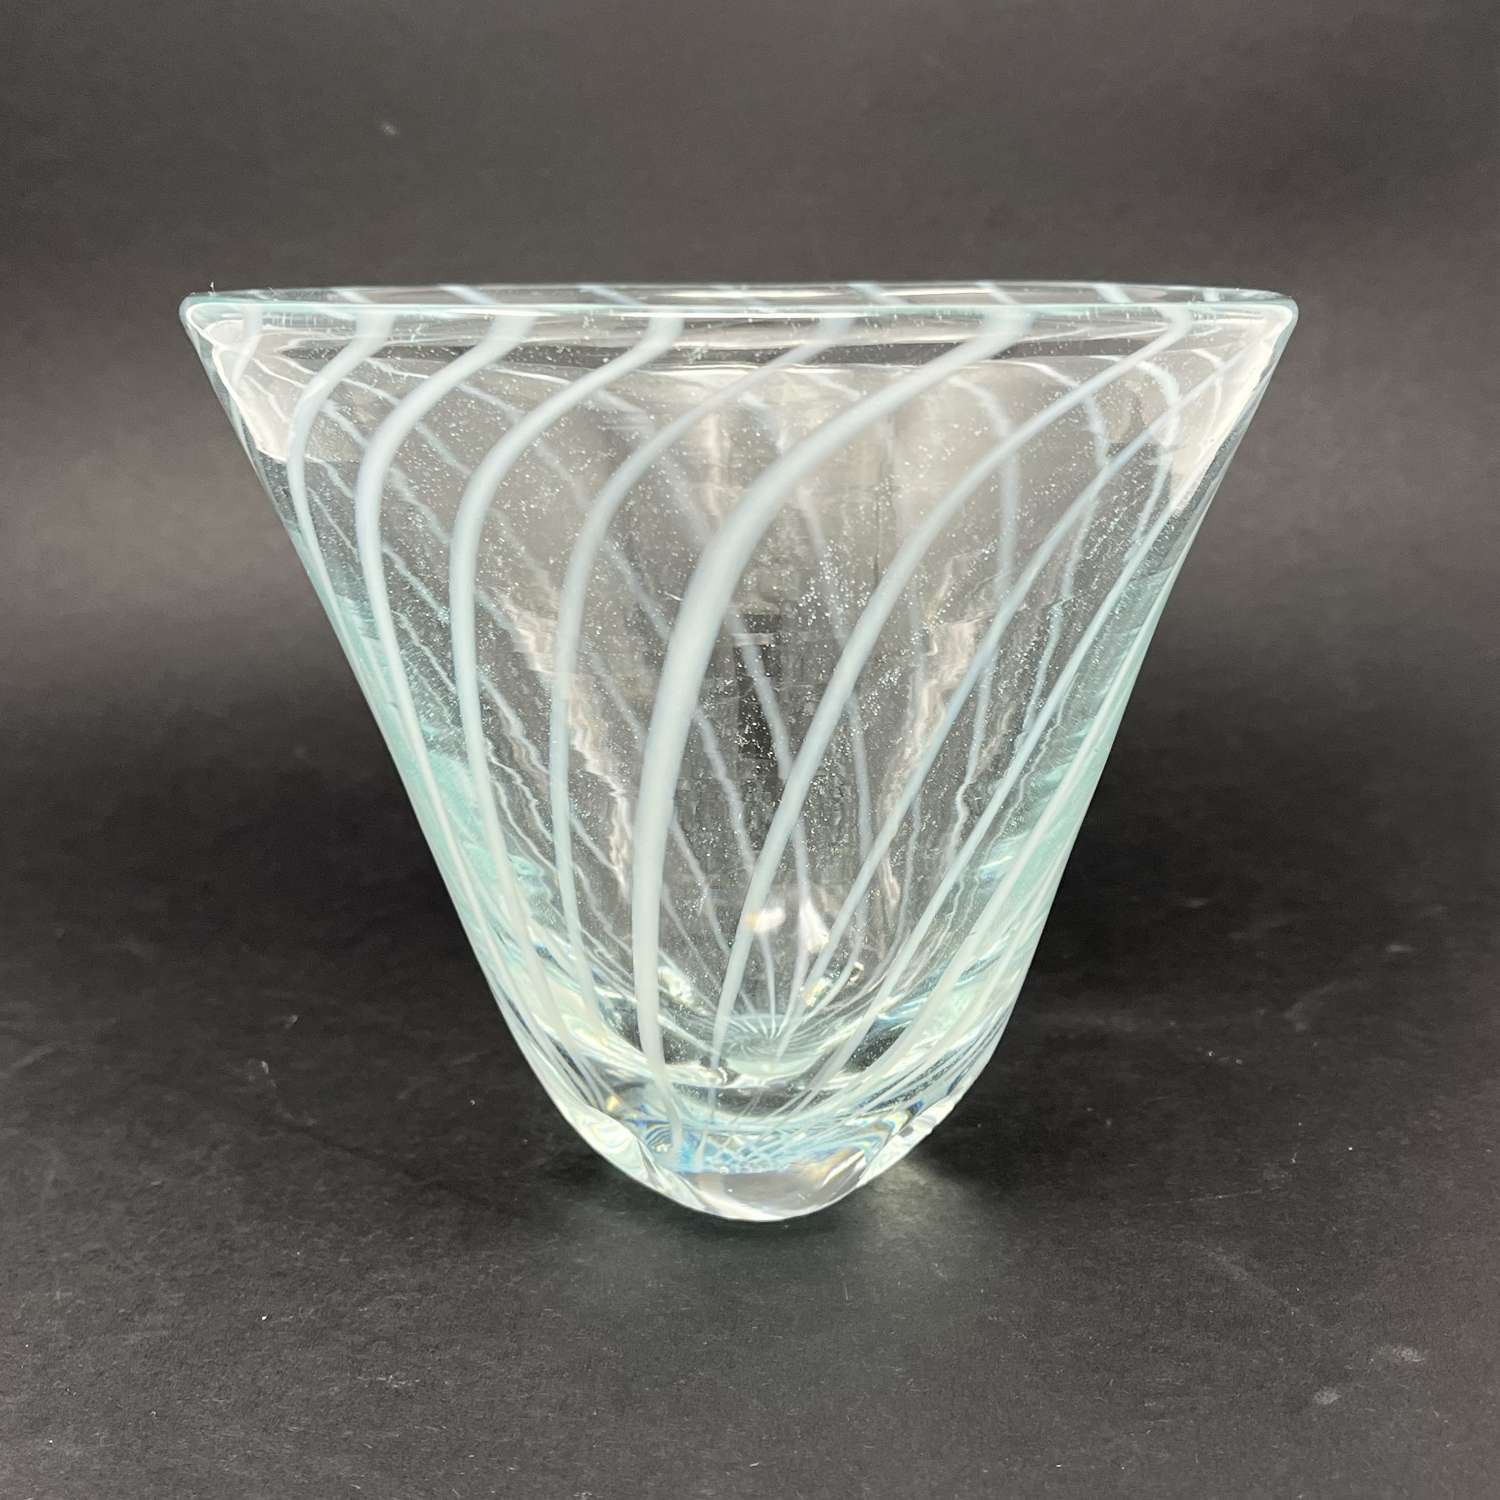 William de Moor flared glass vase with lines Flygsfors Sweden 1940s